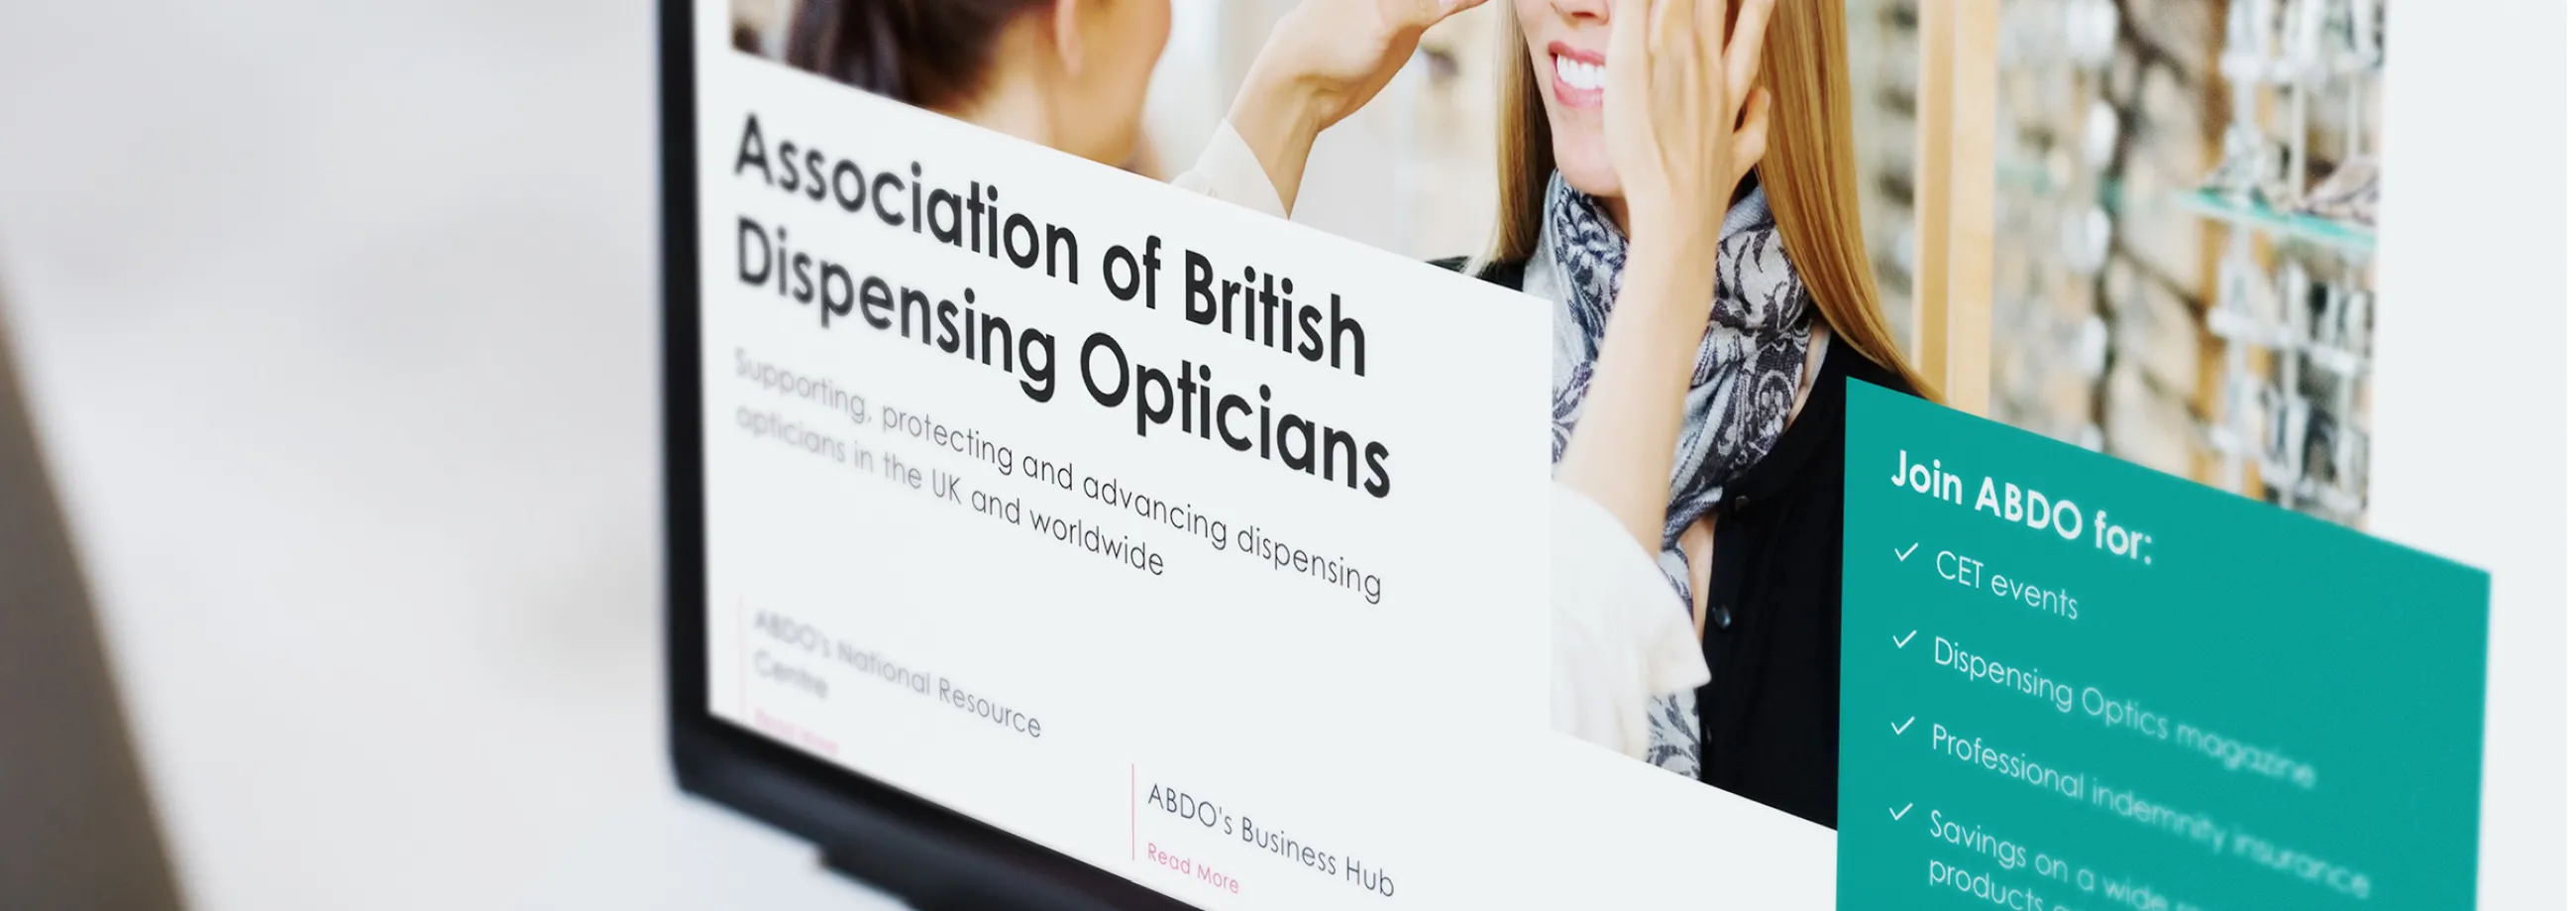 Website for Association of British Dispensing Opticians (ABDO)